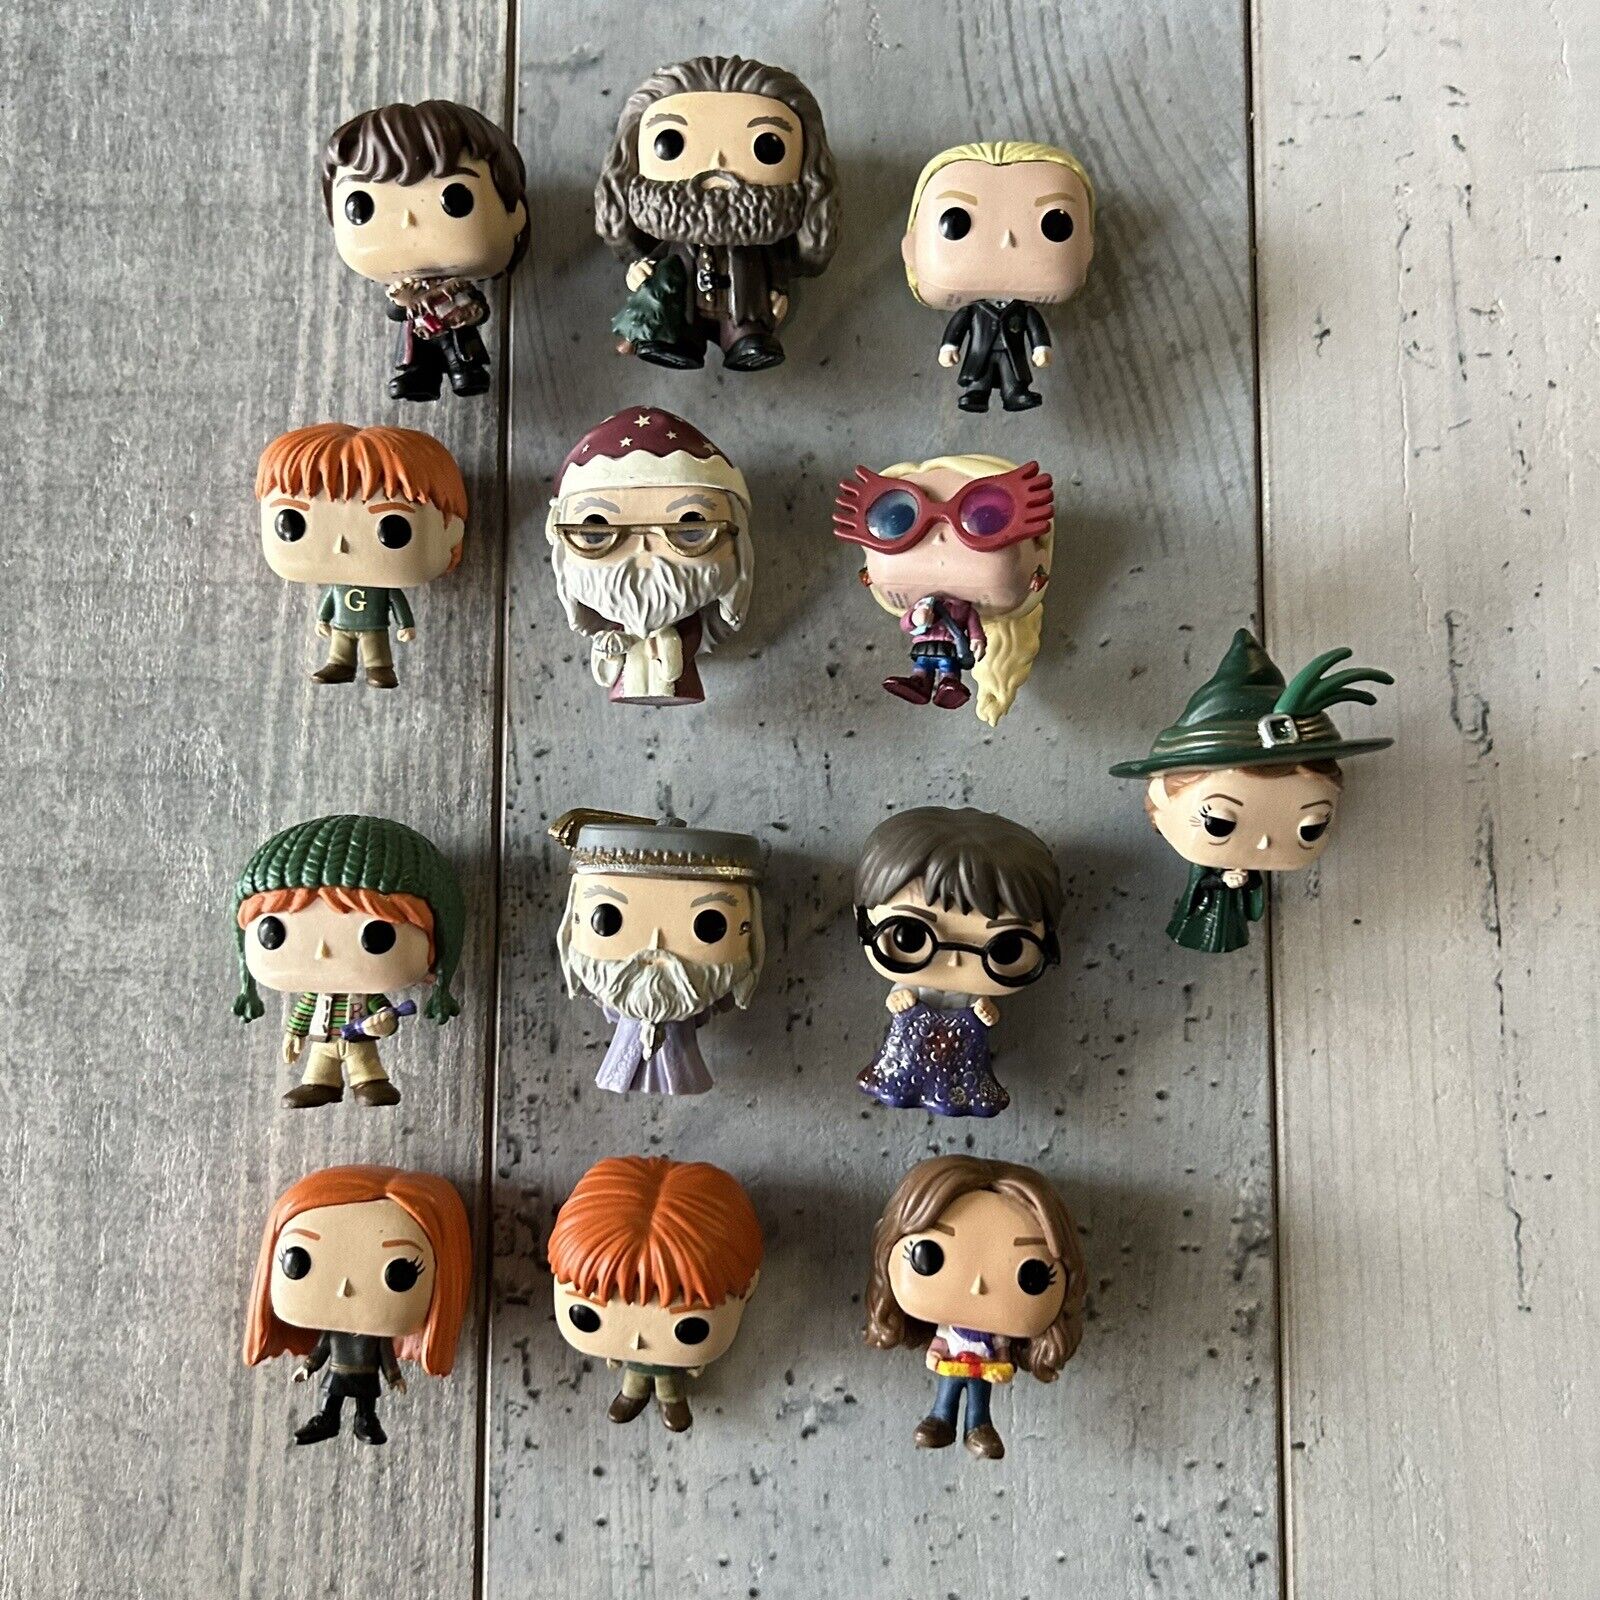 Harry Potter Funko Pop Mini Figures Lot of 13